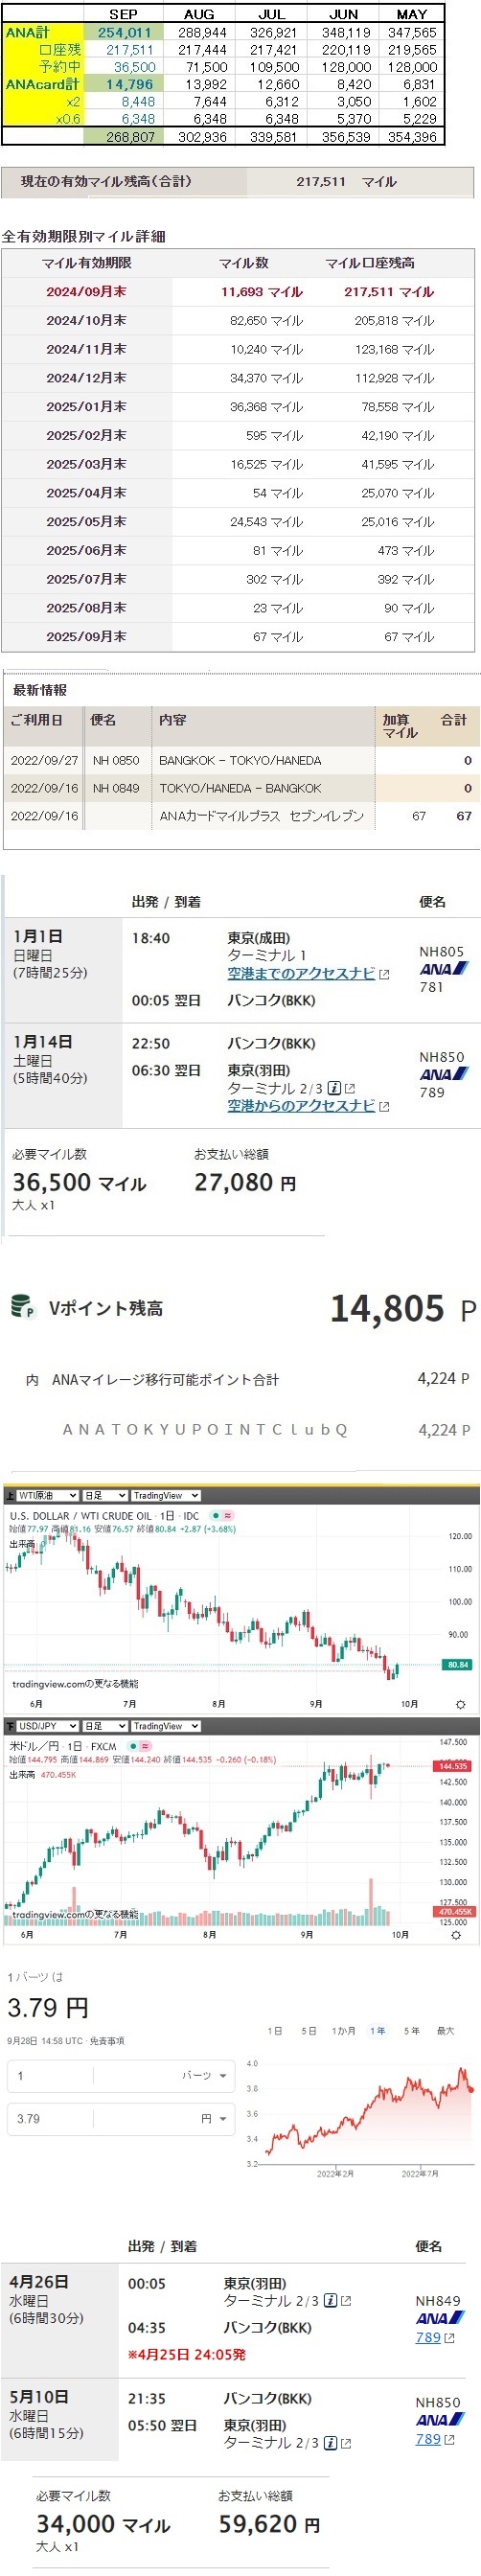 【ANAマイル】 累計獲得970,011M→716,000M搭乗